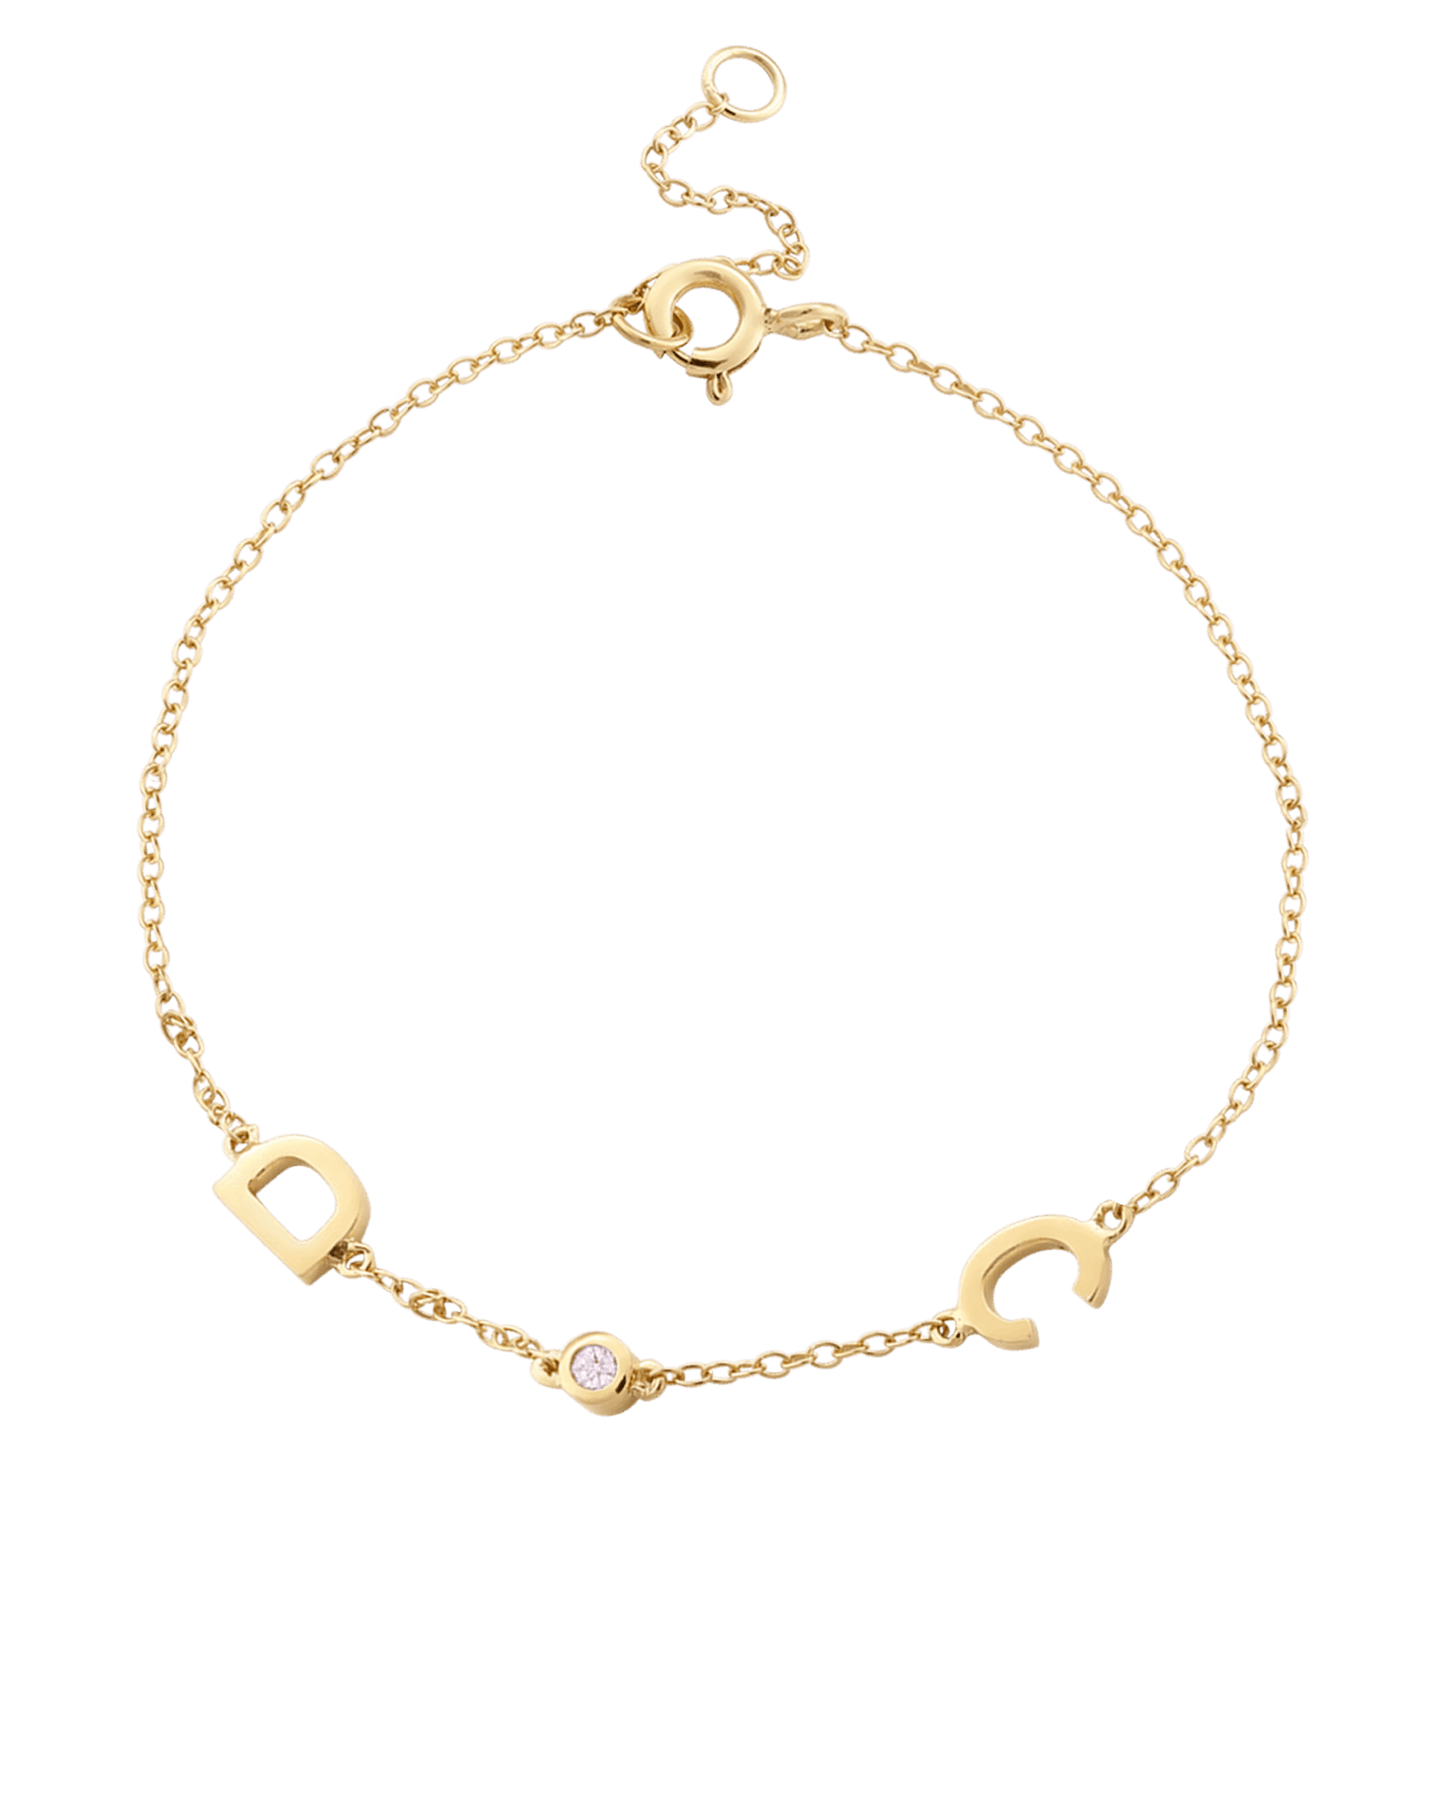 The Initial Bracelet with Diamonds - 18K Gold Vermeil Bracelets magal-dev 2 Initials + 1 Diamond +$20 6"-7" (S-M wrist) 